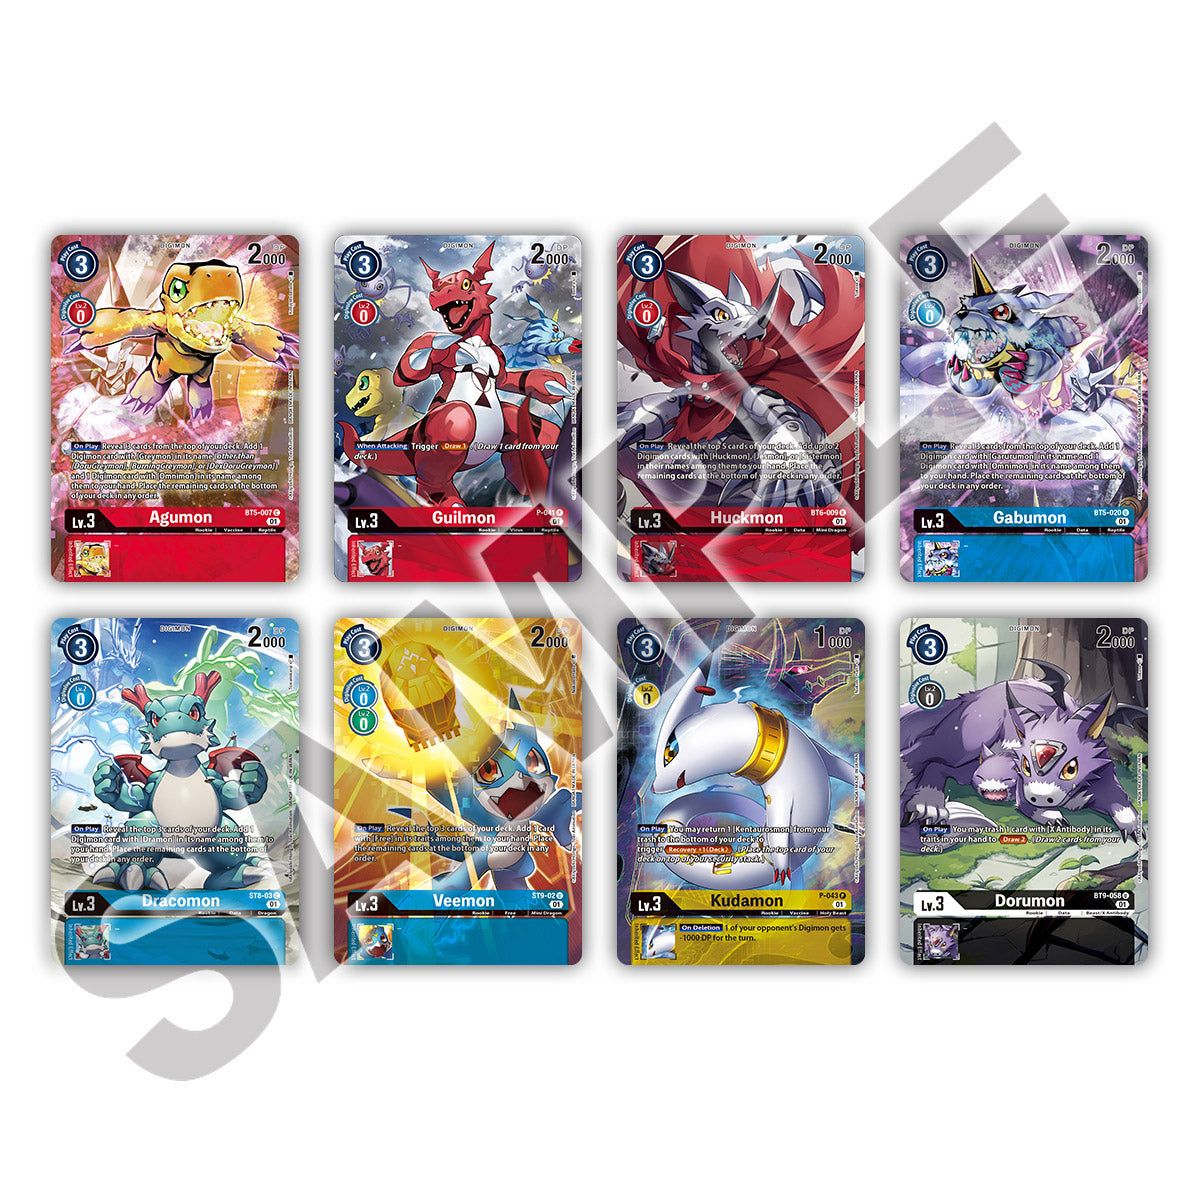 Digimon Card Game Royal Knights Binder Set (PB-13)